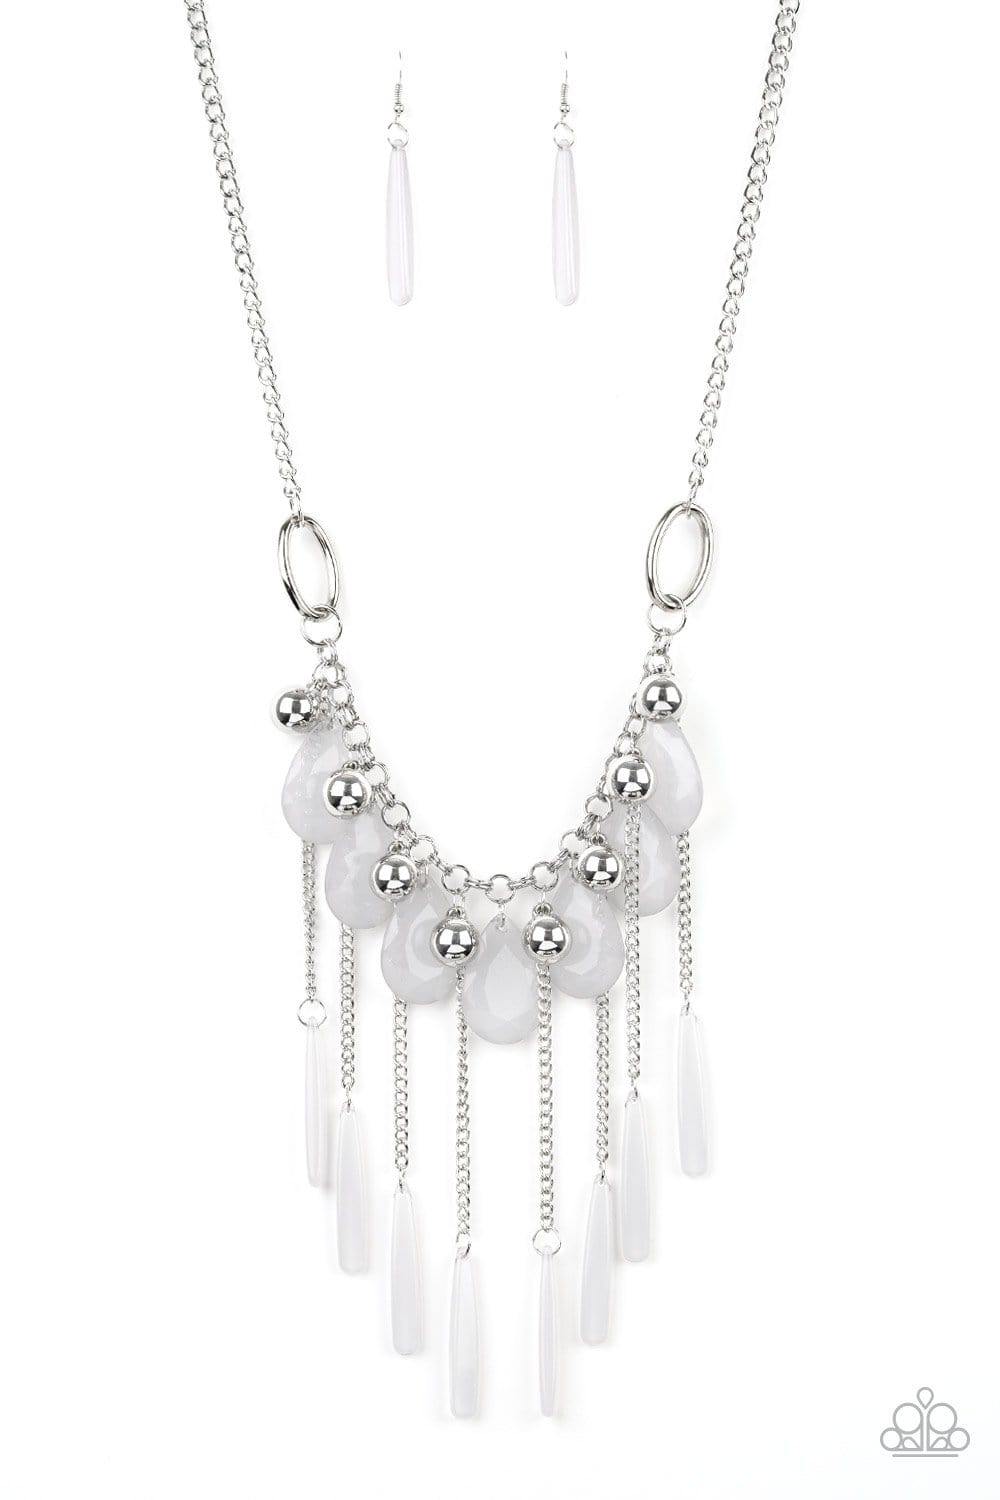 Paparazzi necklace - Red Carpet Royal - White – jewelryandbling.com